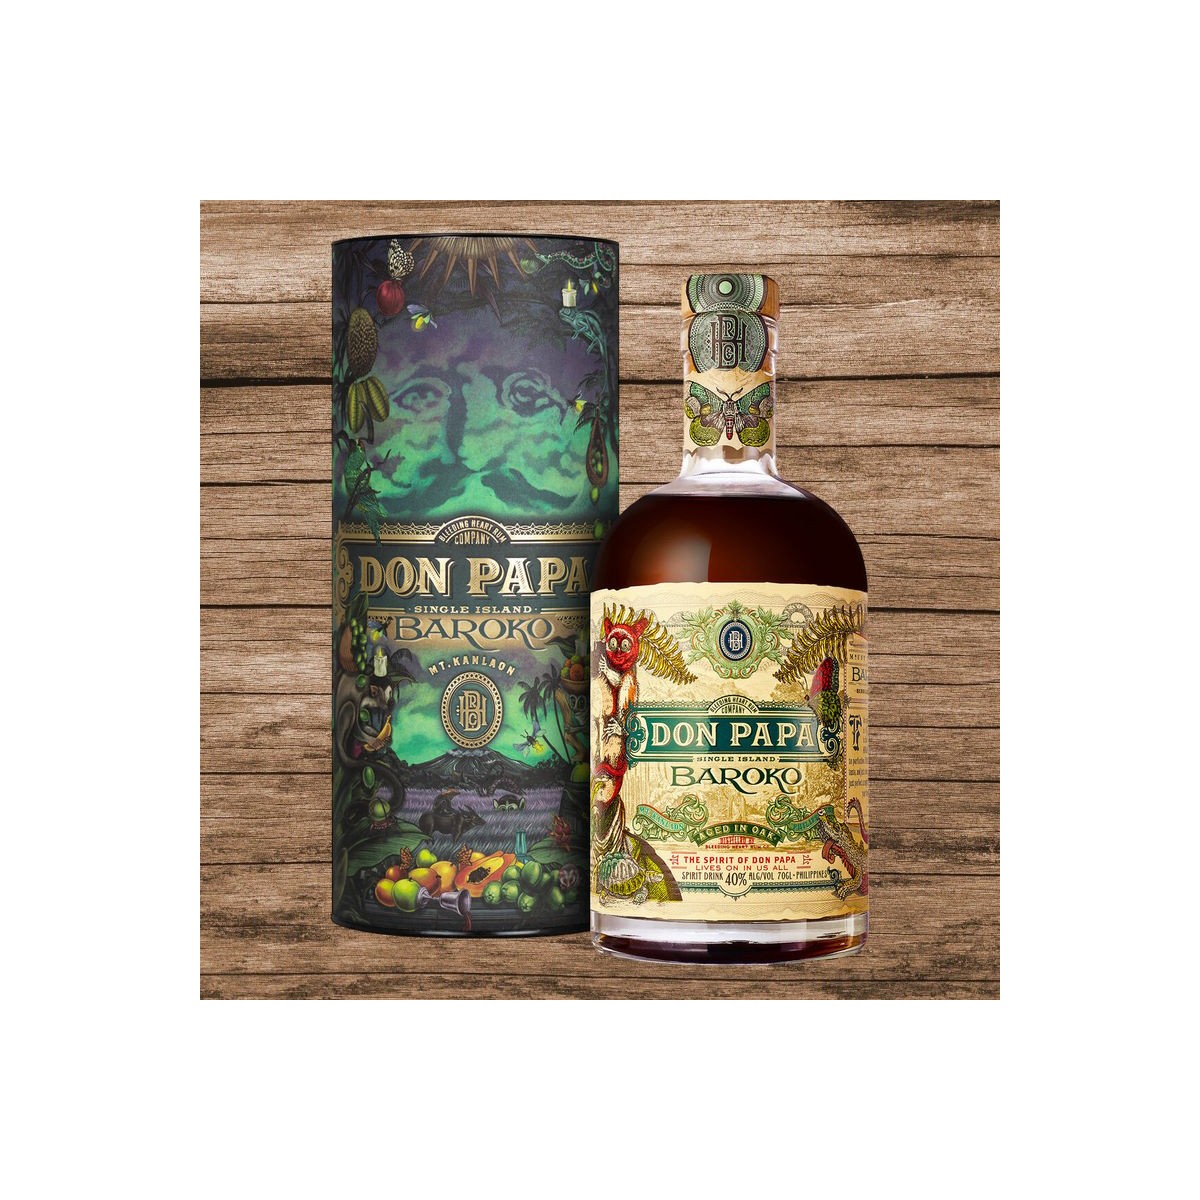 Don Papa Sherry Cask Finish Rum 45% 0,7L